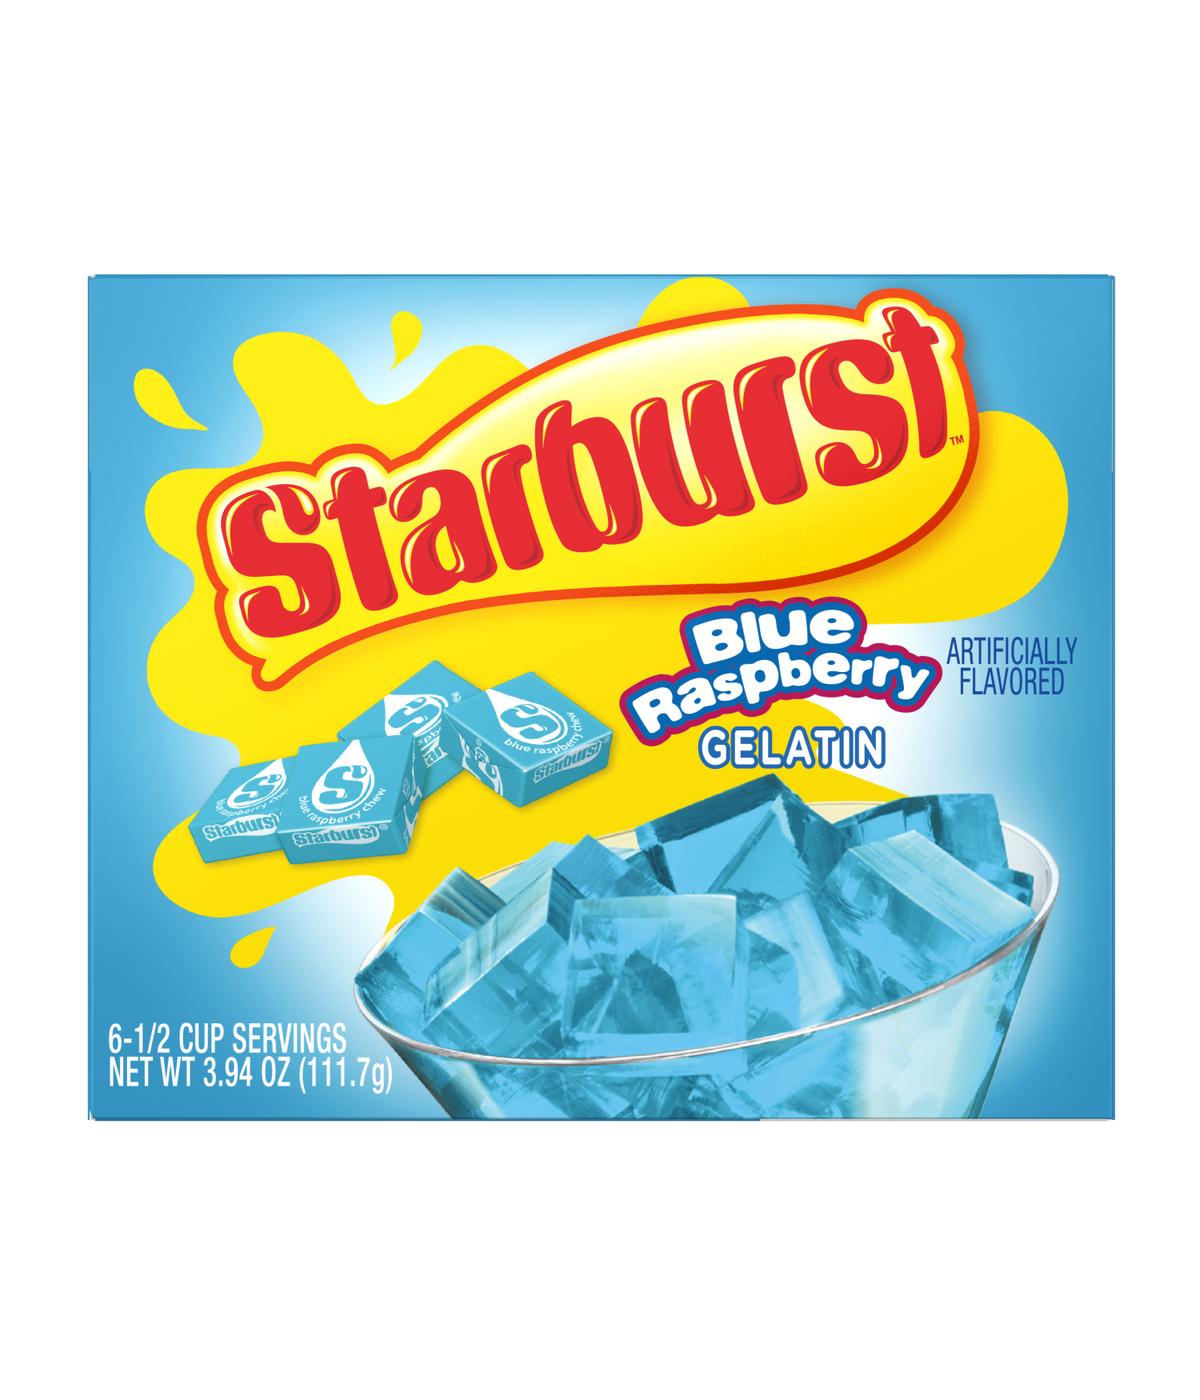 Starburst Gelatin - Blue Raspberry; image 1 of 2